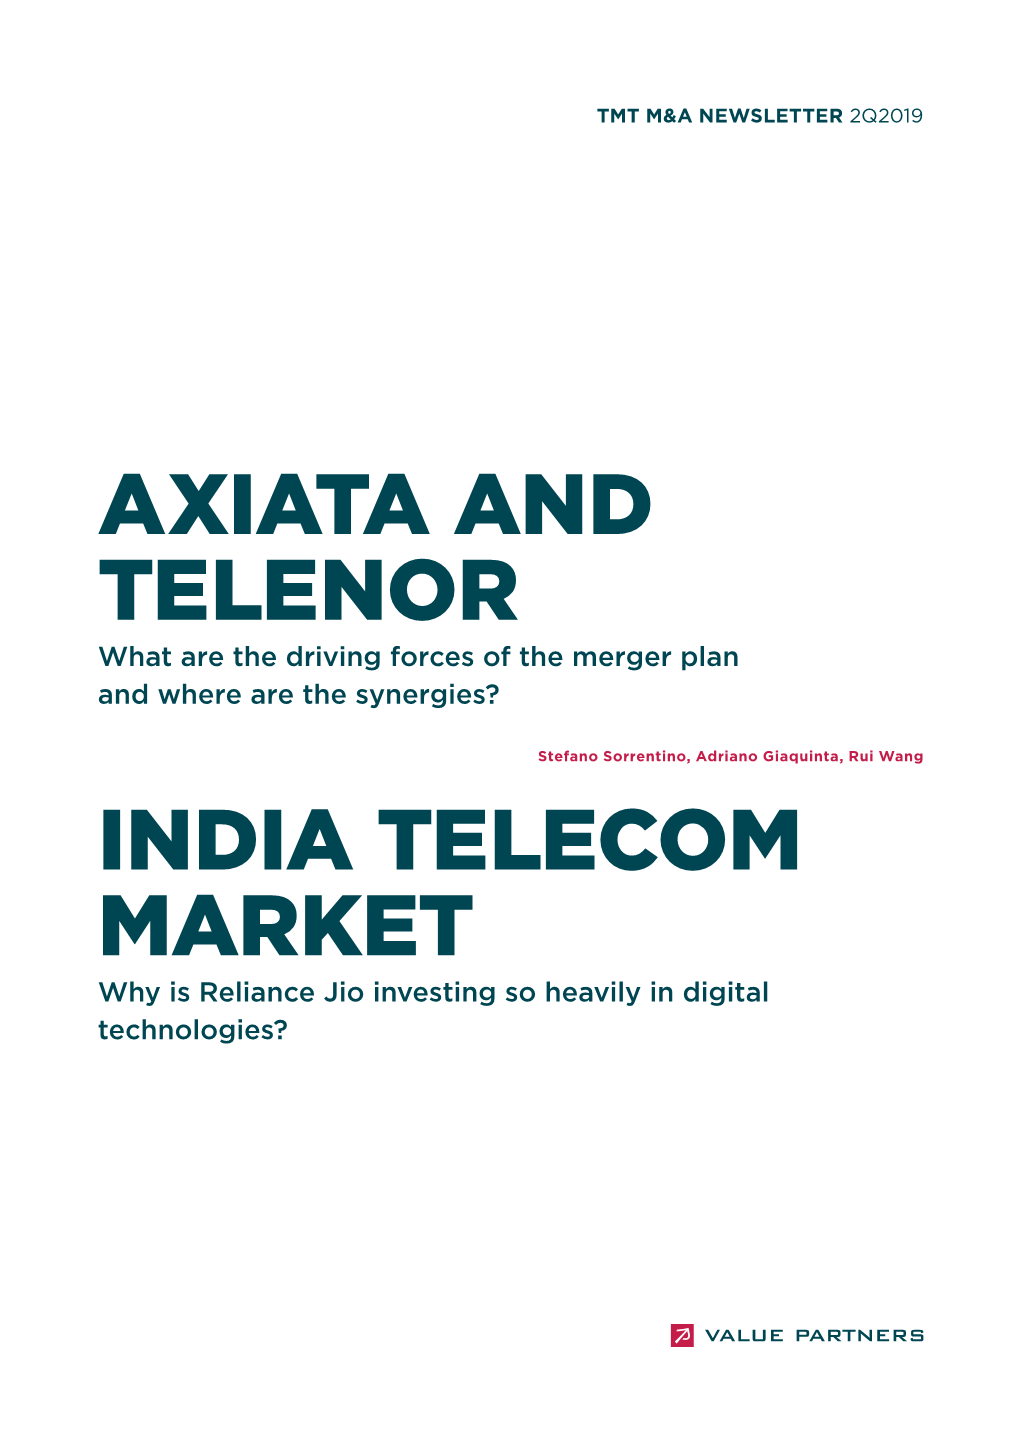 Axiata and Telenor India Telecom Market